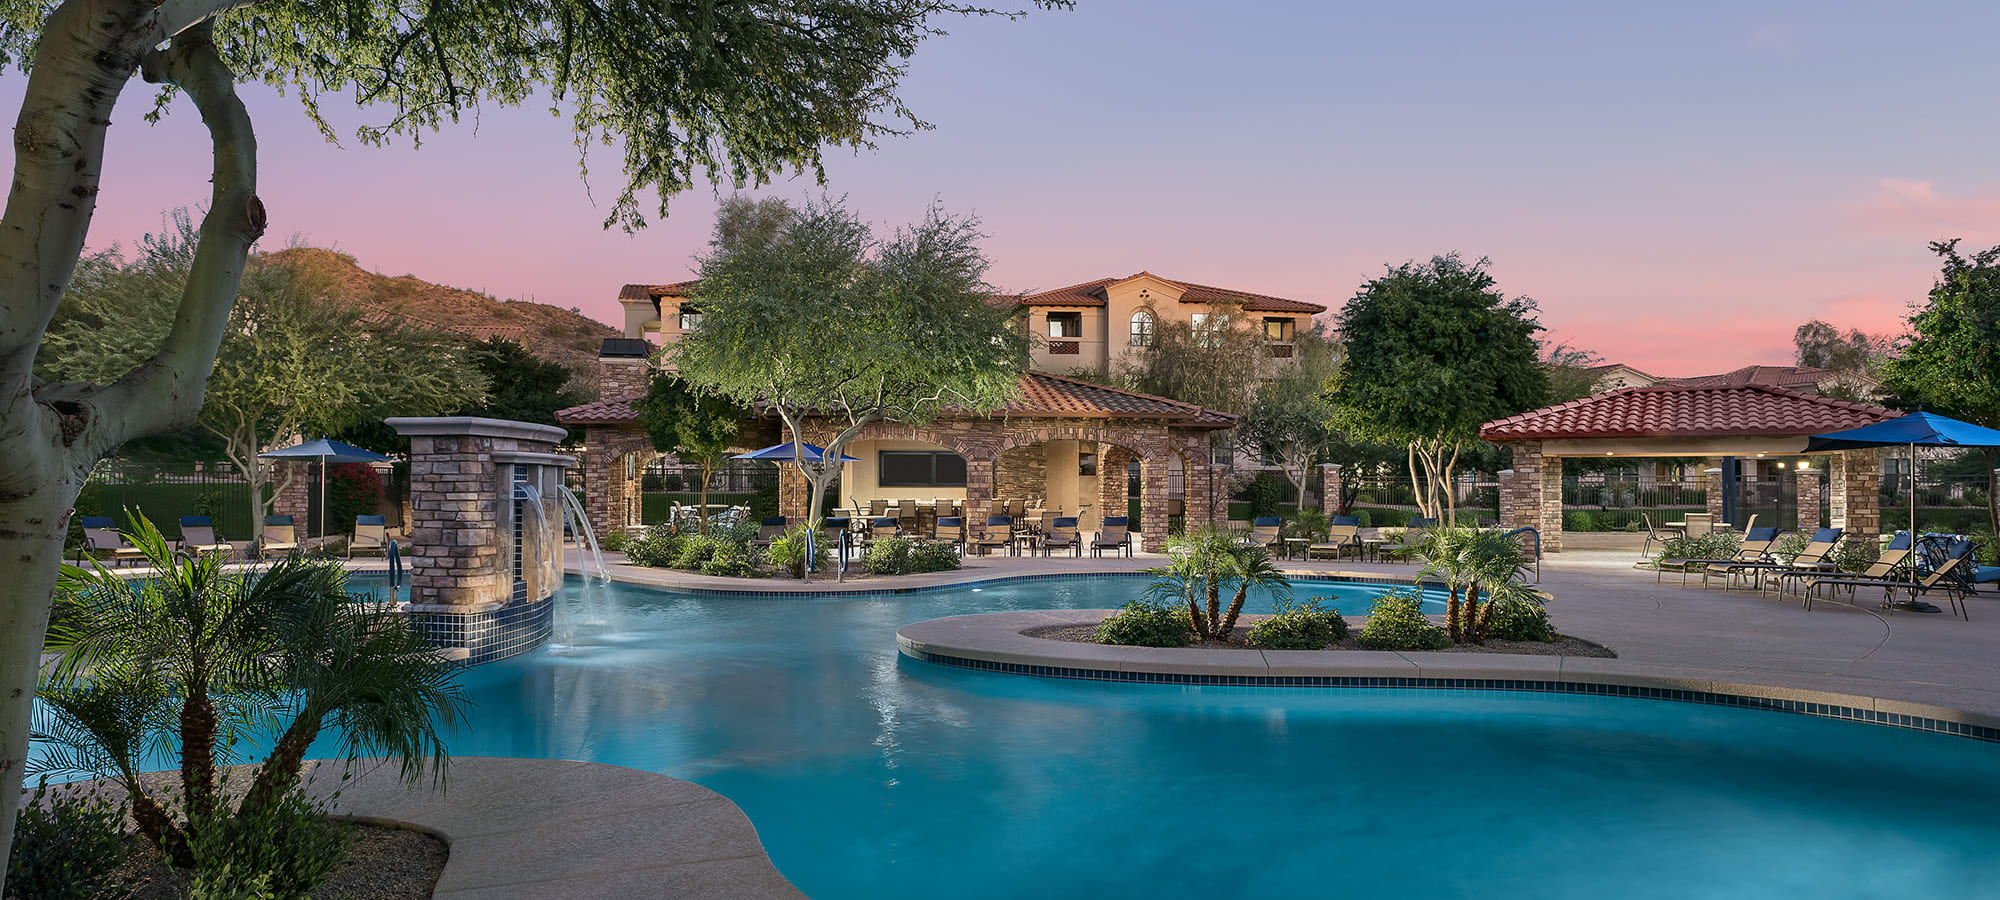 Beautiful Swimming Pool at San Norterra in Phoenix, Arizona